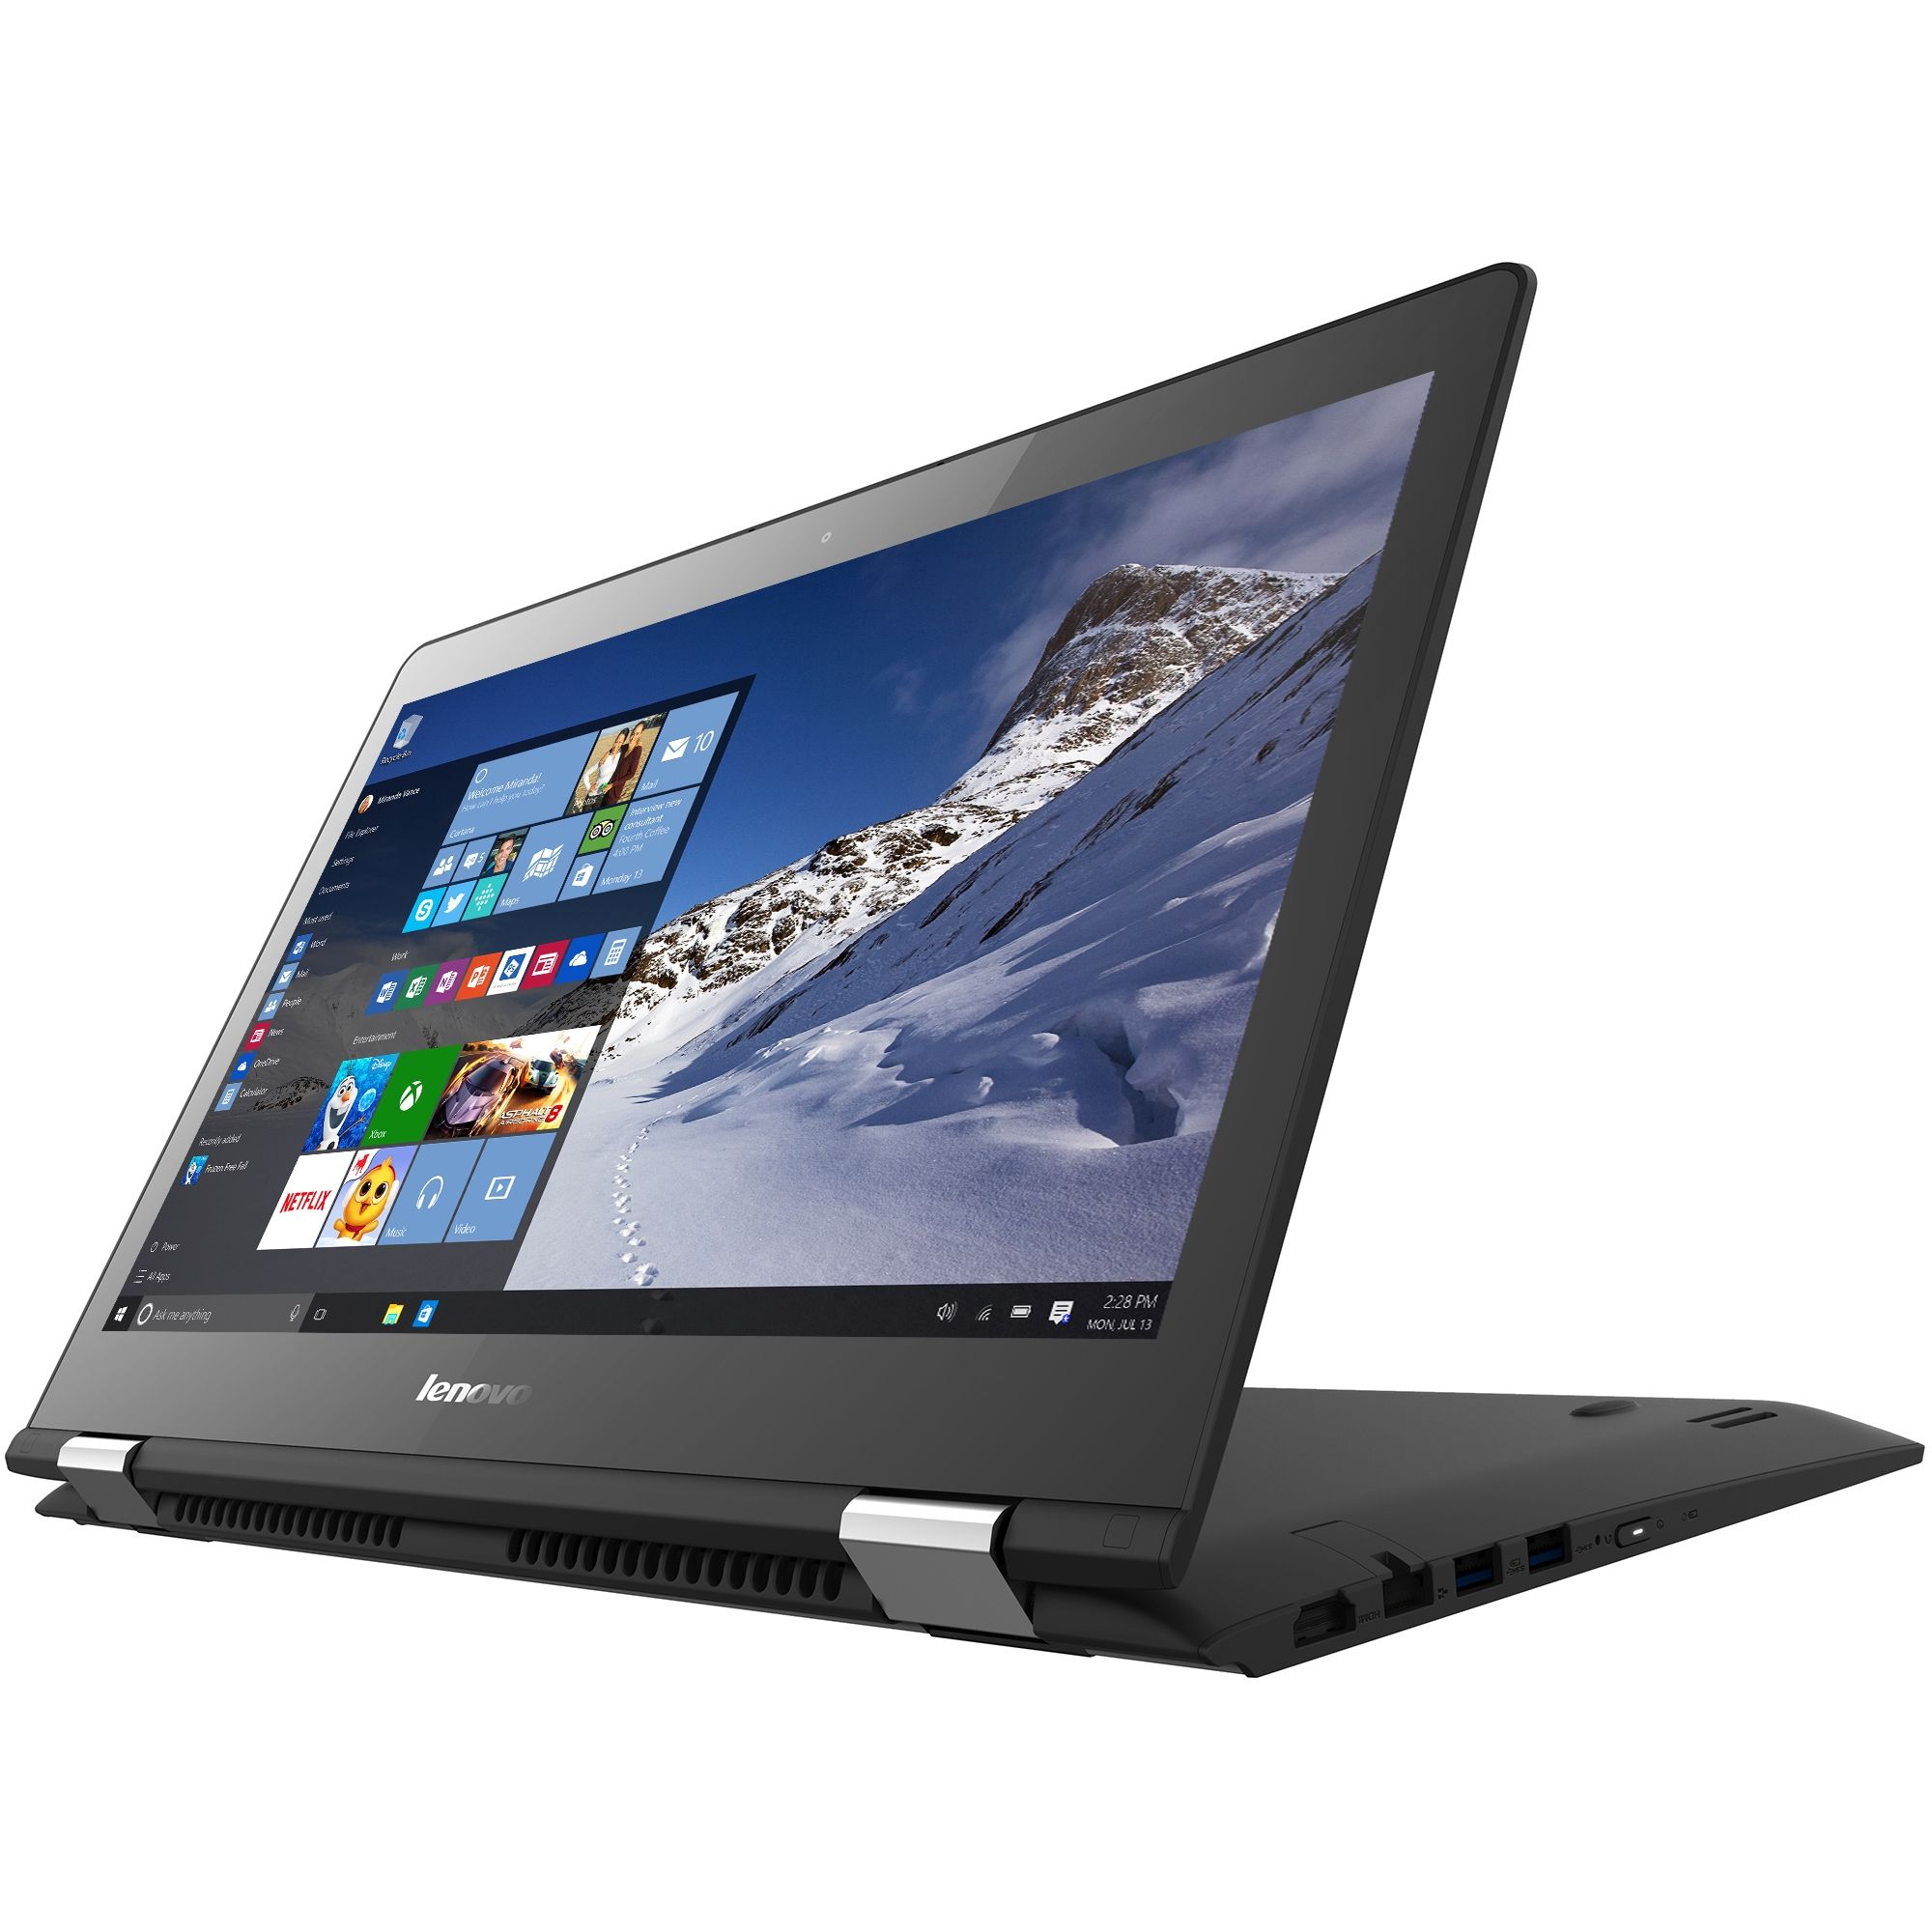  Laptop 2 in 1 Lenovo Yoga 500-14IBD, Intel Core i3-5005U, 4GB DDR3, SSD 128GB, Intel HD Graphics, Windows 10 Home 